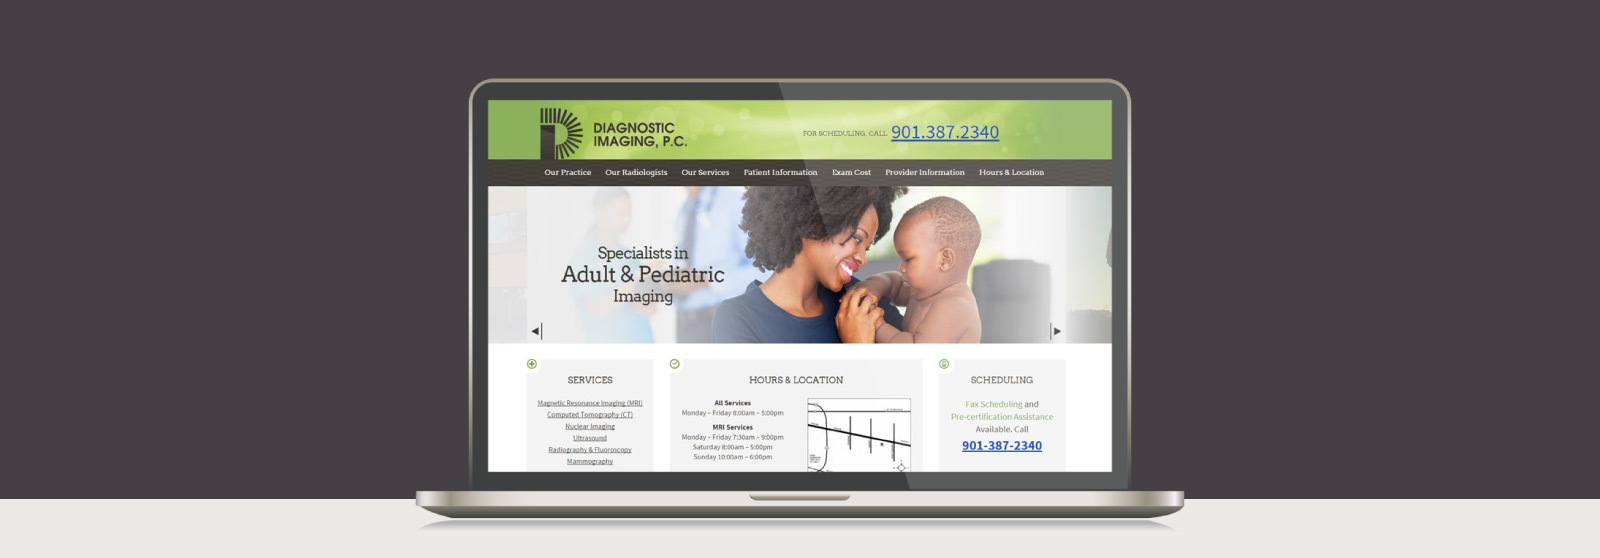 Diagnostic Imaging Website